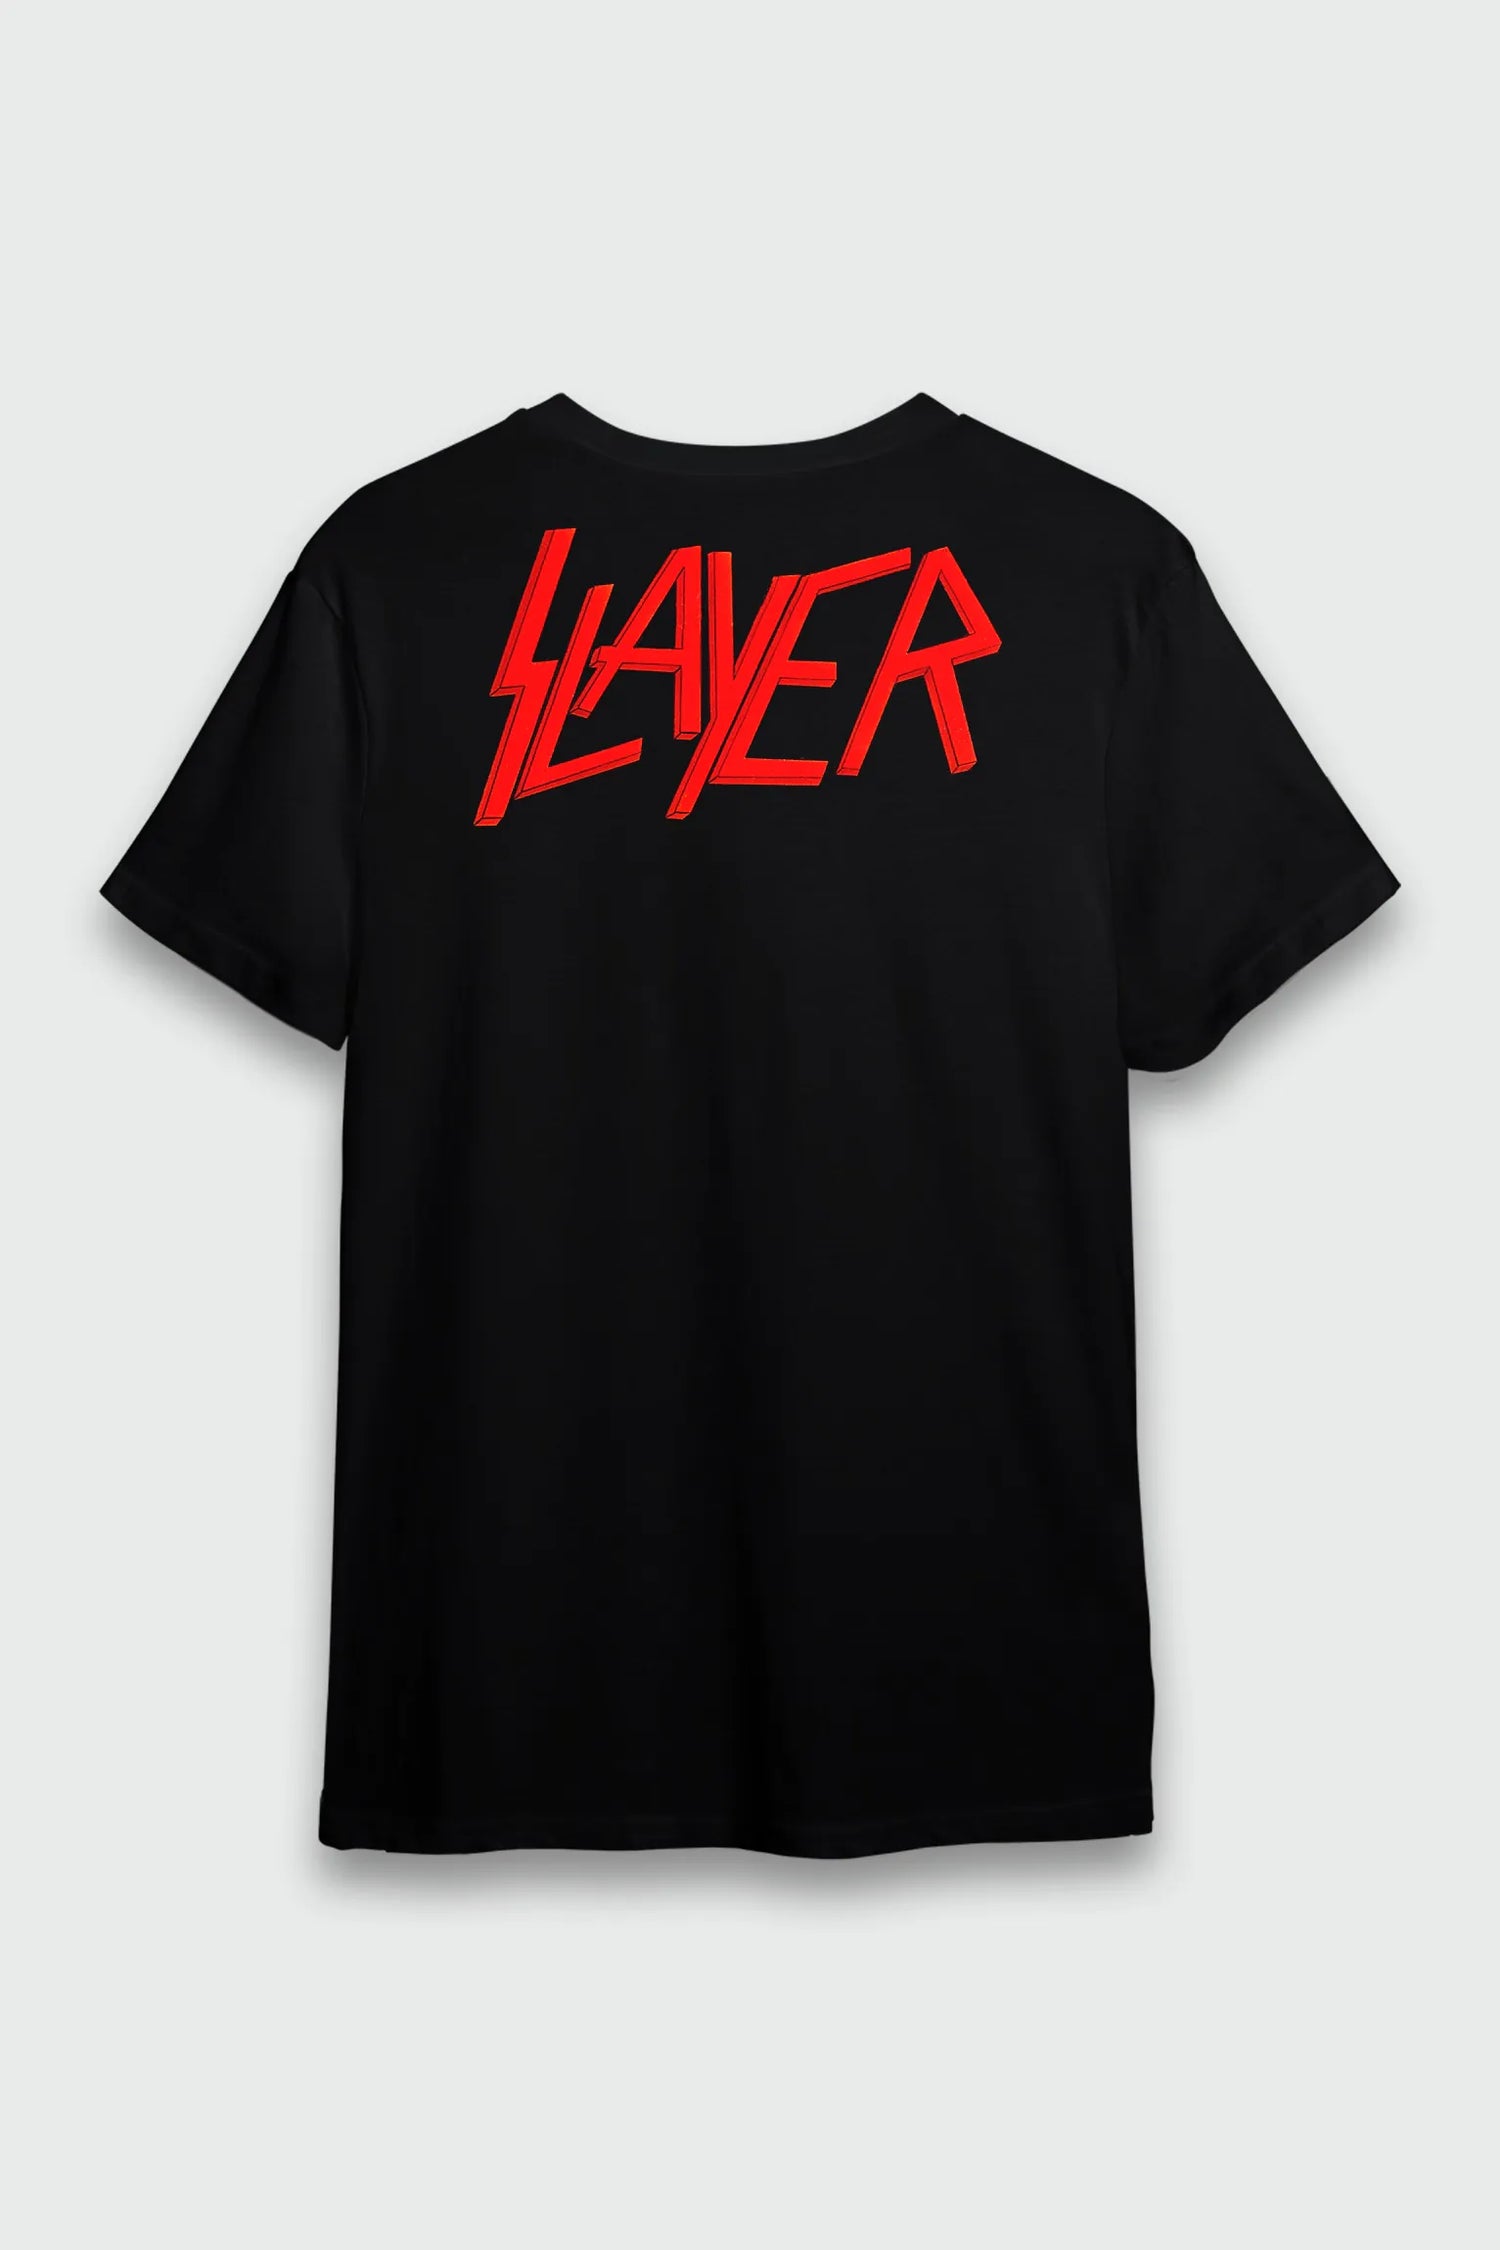 Camiseta Slayer Silver Eagle